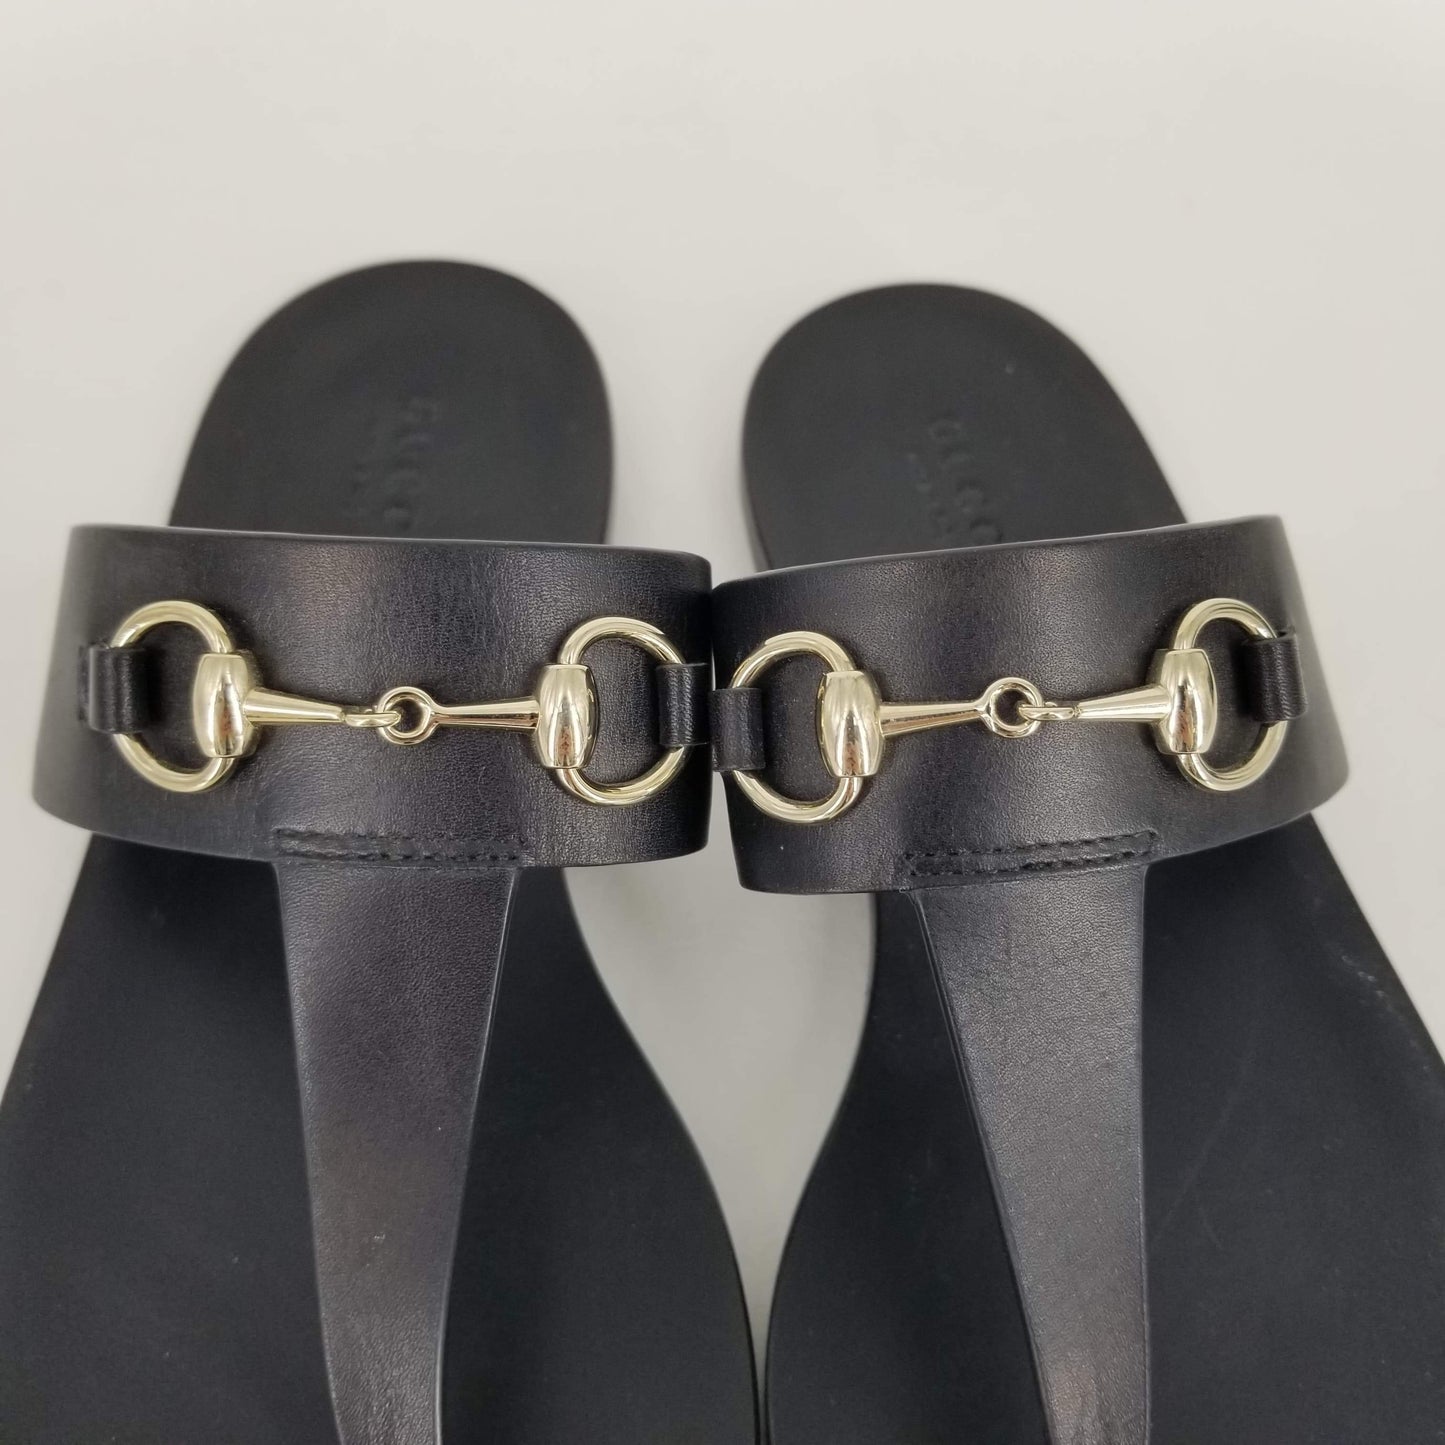 Authentic Gucci Black Horsebit Thong Sandals